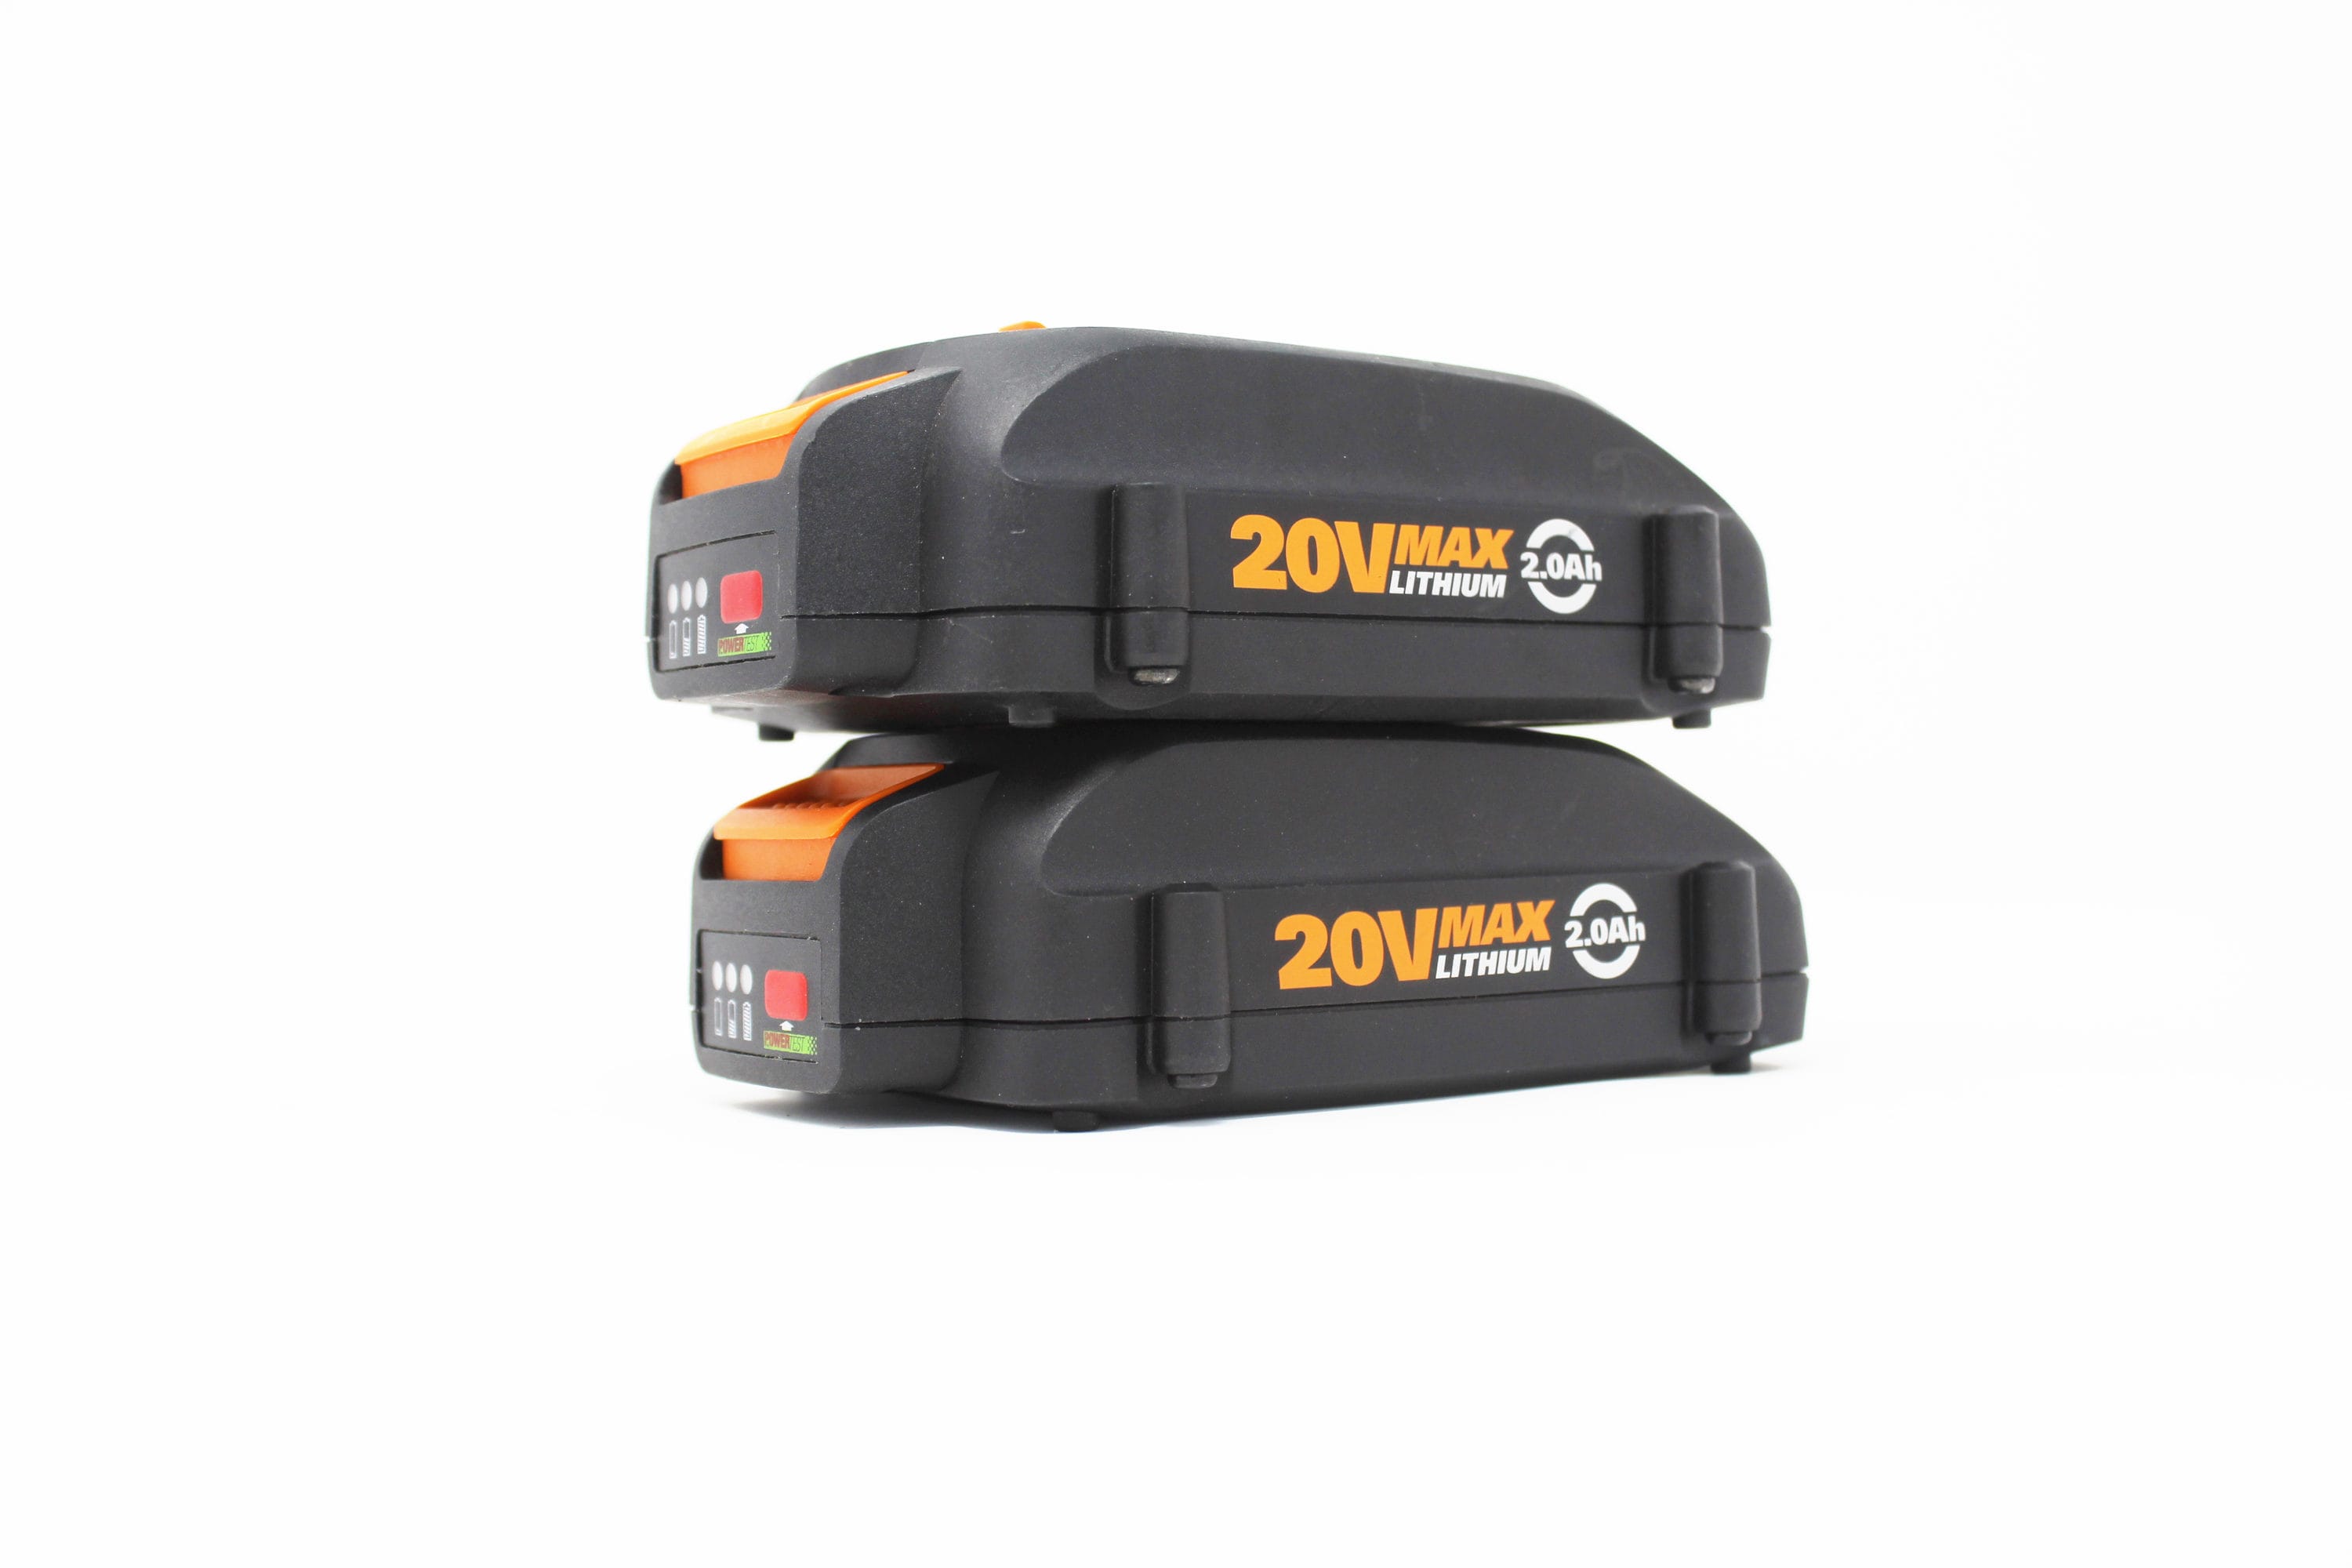 Worx 20V Power Share 2.0 Ah Lithium Battery 2 Pack - WA3575.2